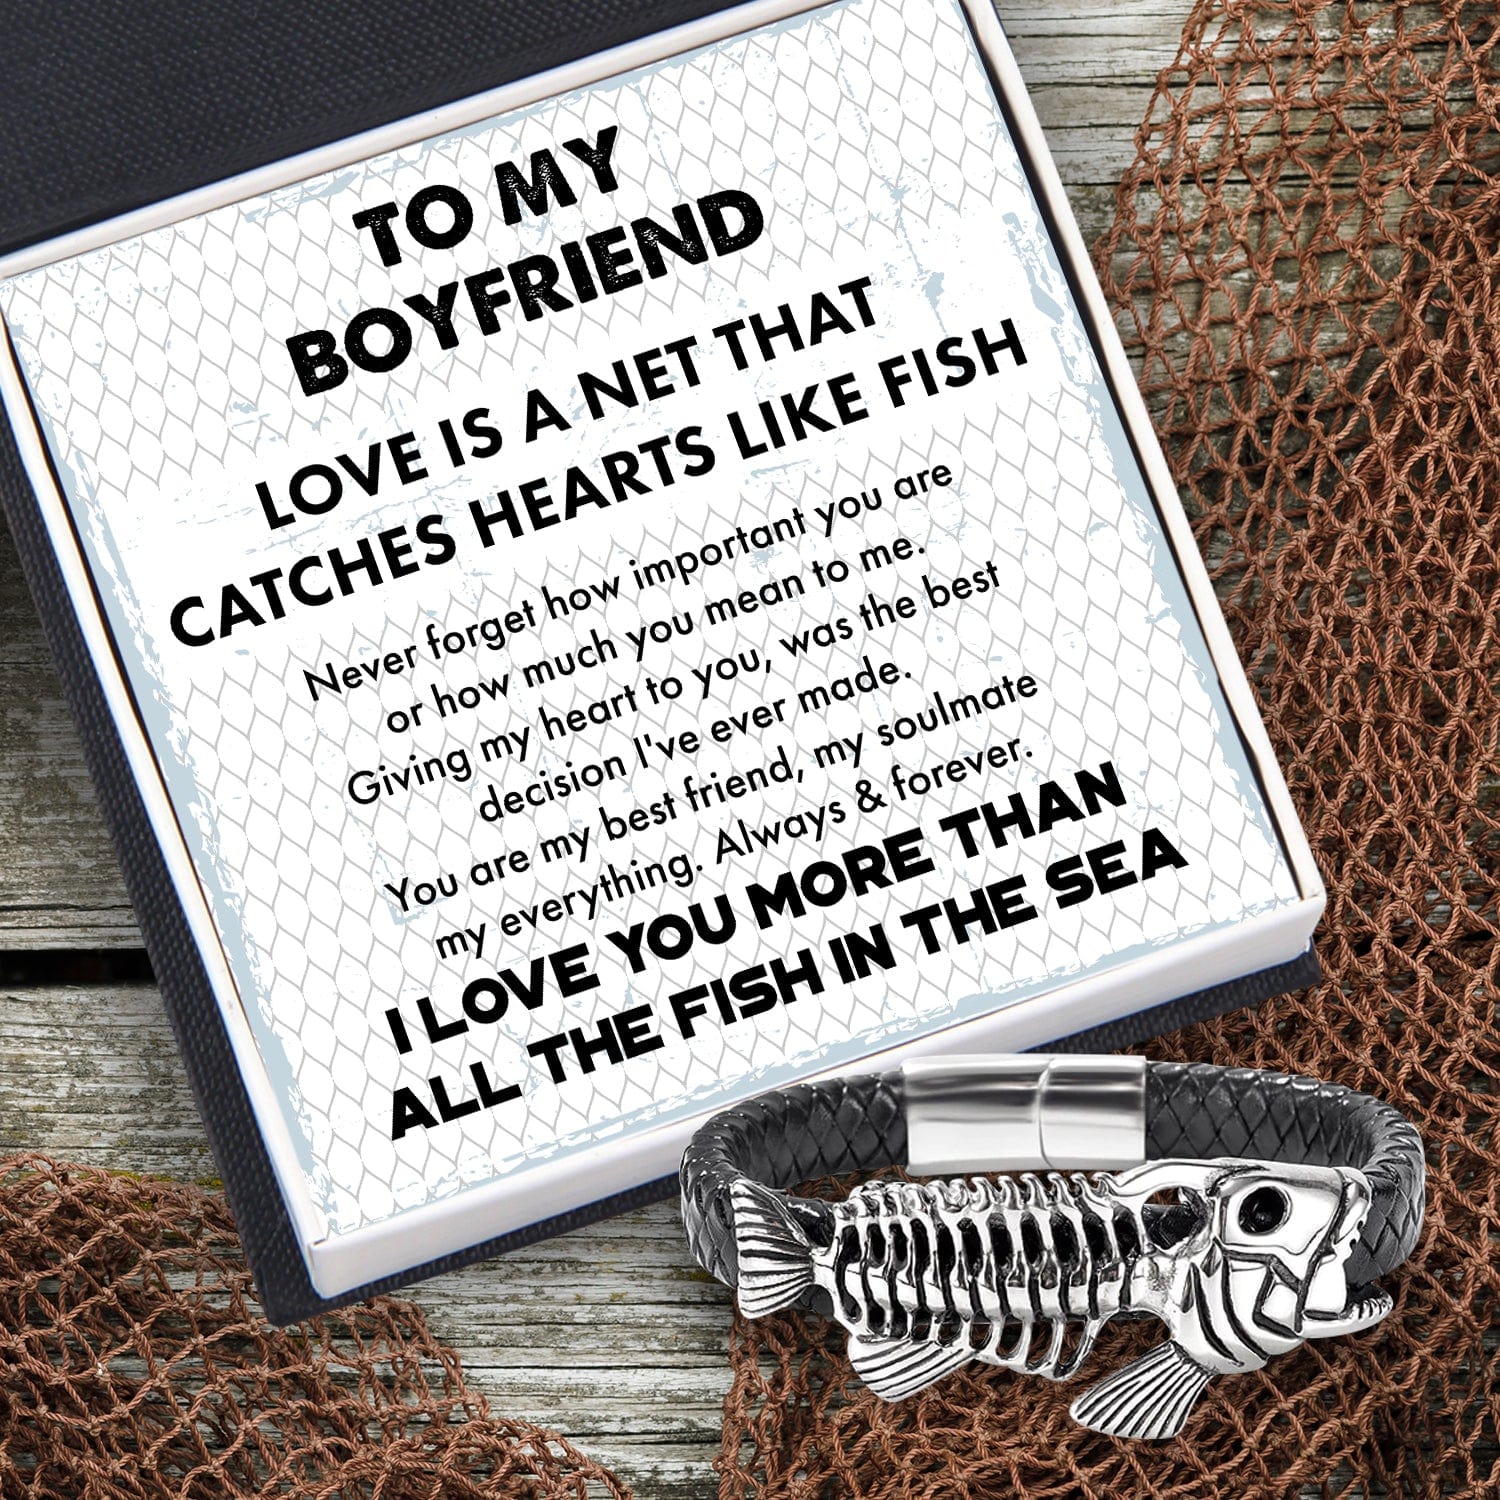 Black Leather Bracelet Fish Bone - Fishing - To My Boyfriend - Always & Forever - Gbzr12001